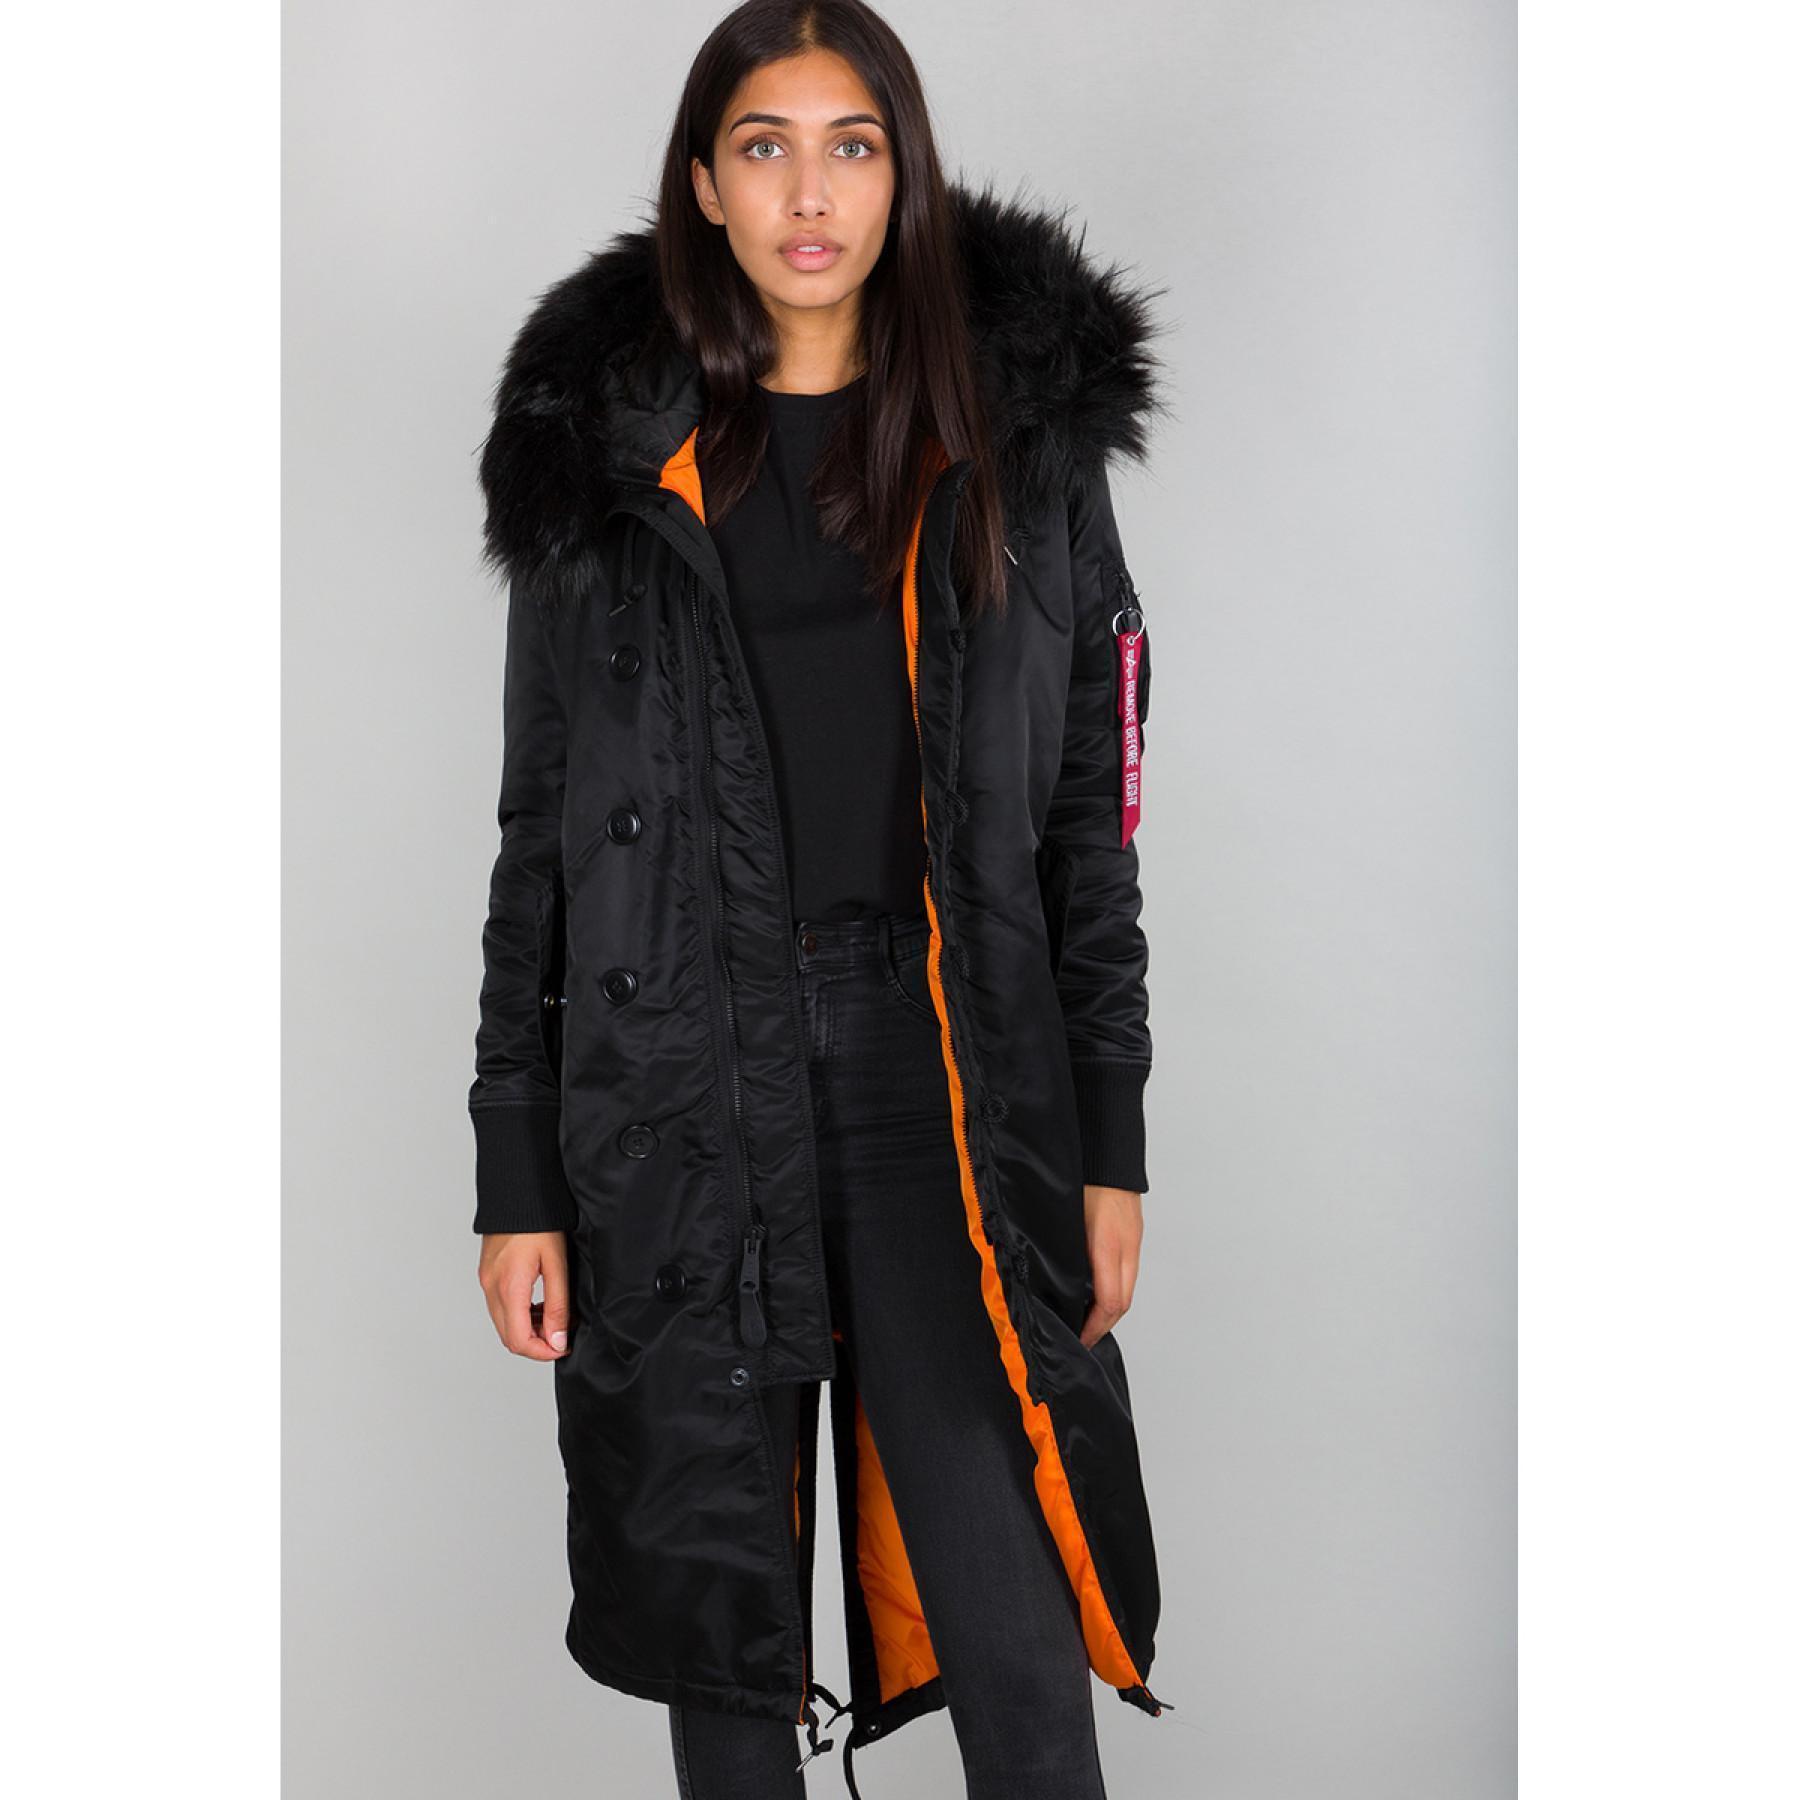 parka Long Coats - - Women\'s Clothing Alpha & Fishtail - Jackets Women Industries